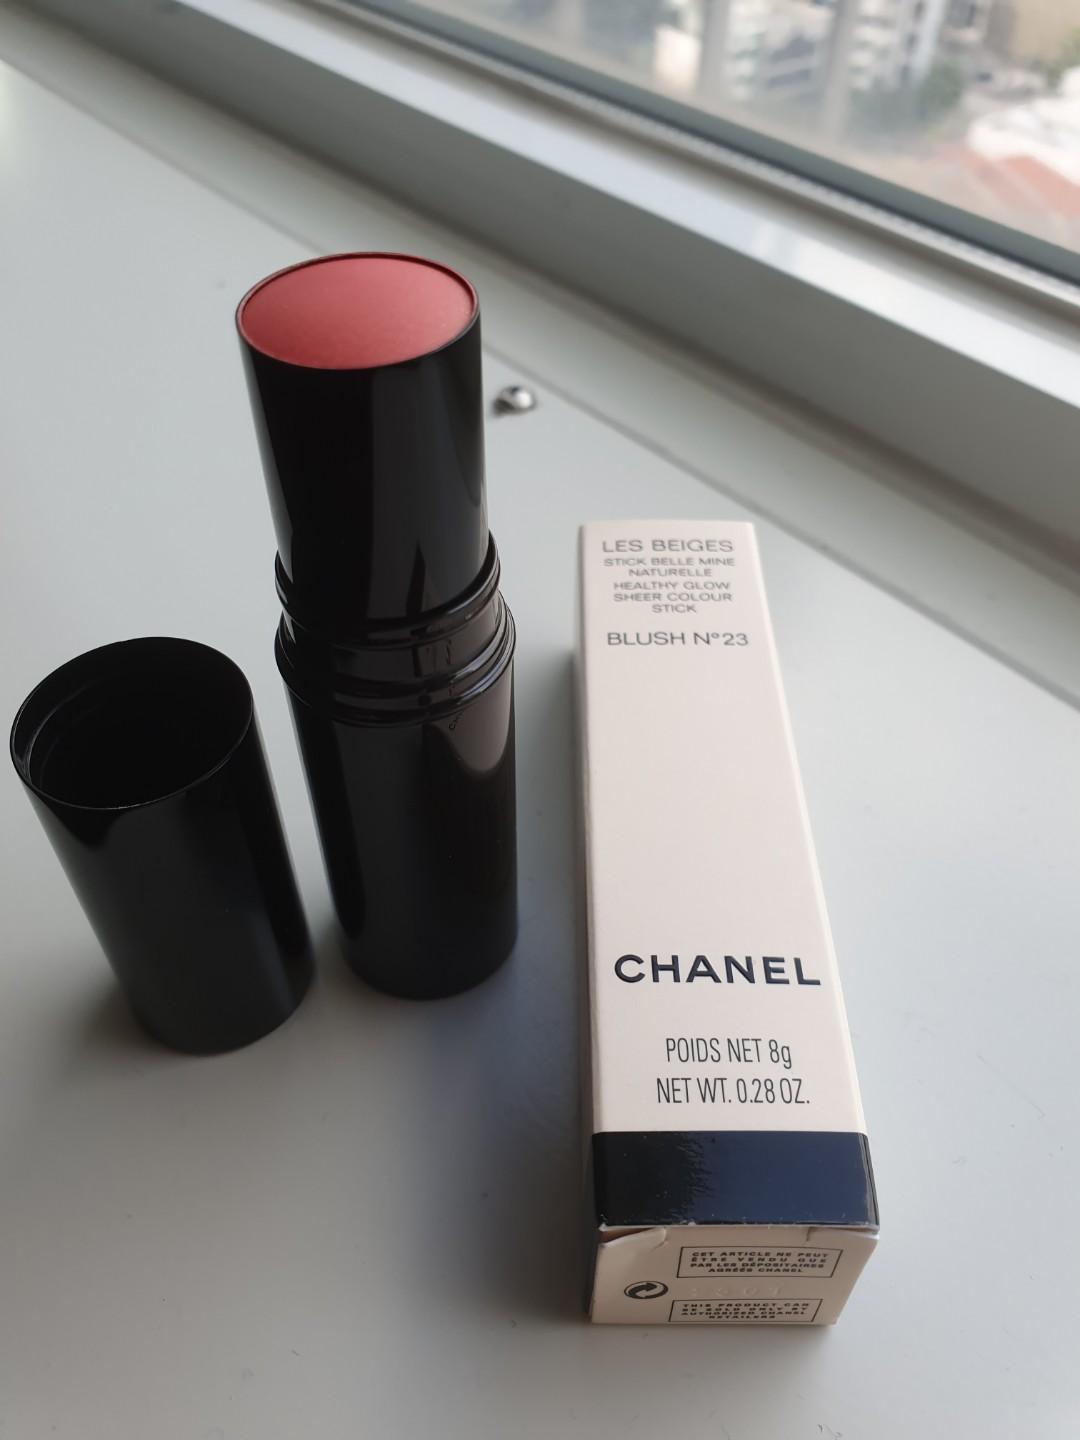 CHANEL Les Beiges Healthy Glow Sheer Colour Stick - Reviews